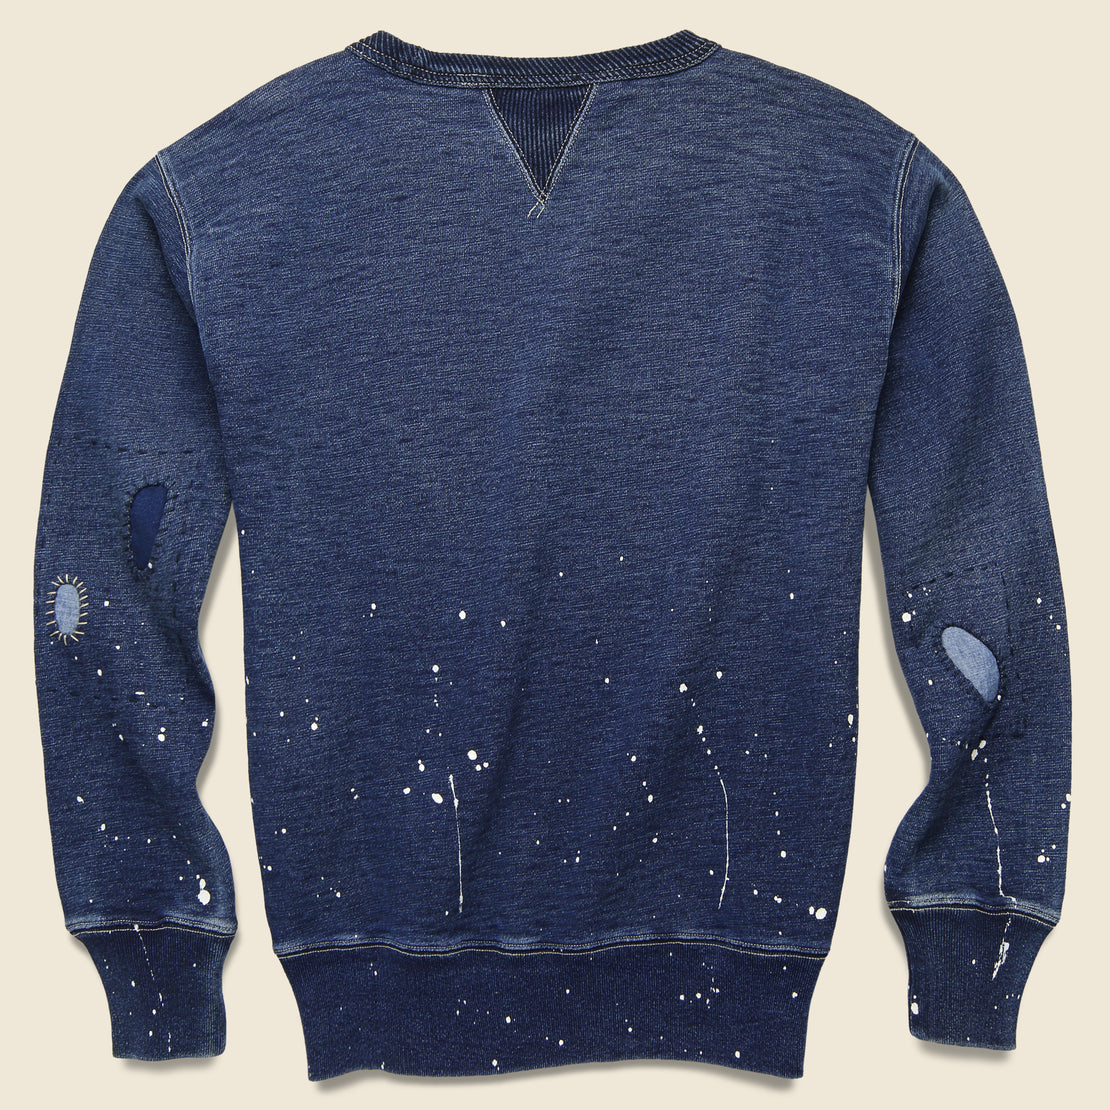 Distressed Double V Crewneck - Washed Blue Indigo - RRL - STAG Provisions - Tops - Fleece / Sweatshirt